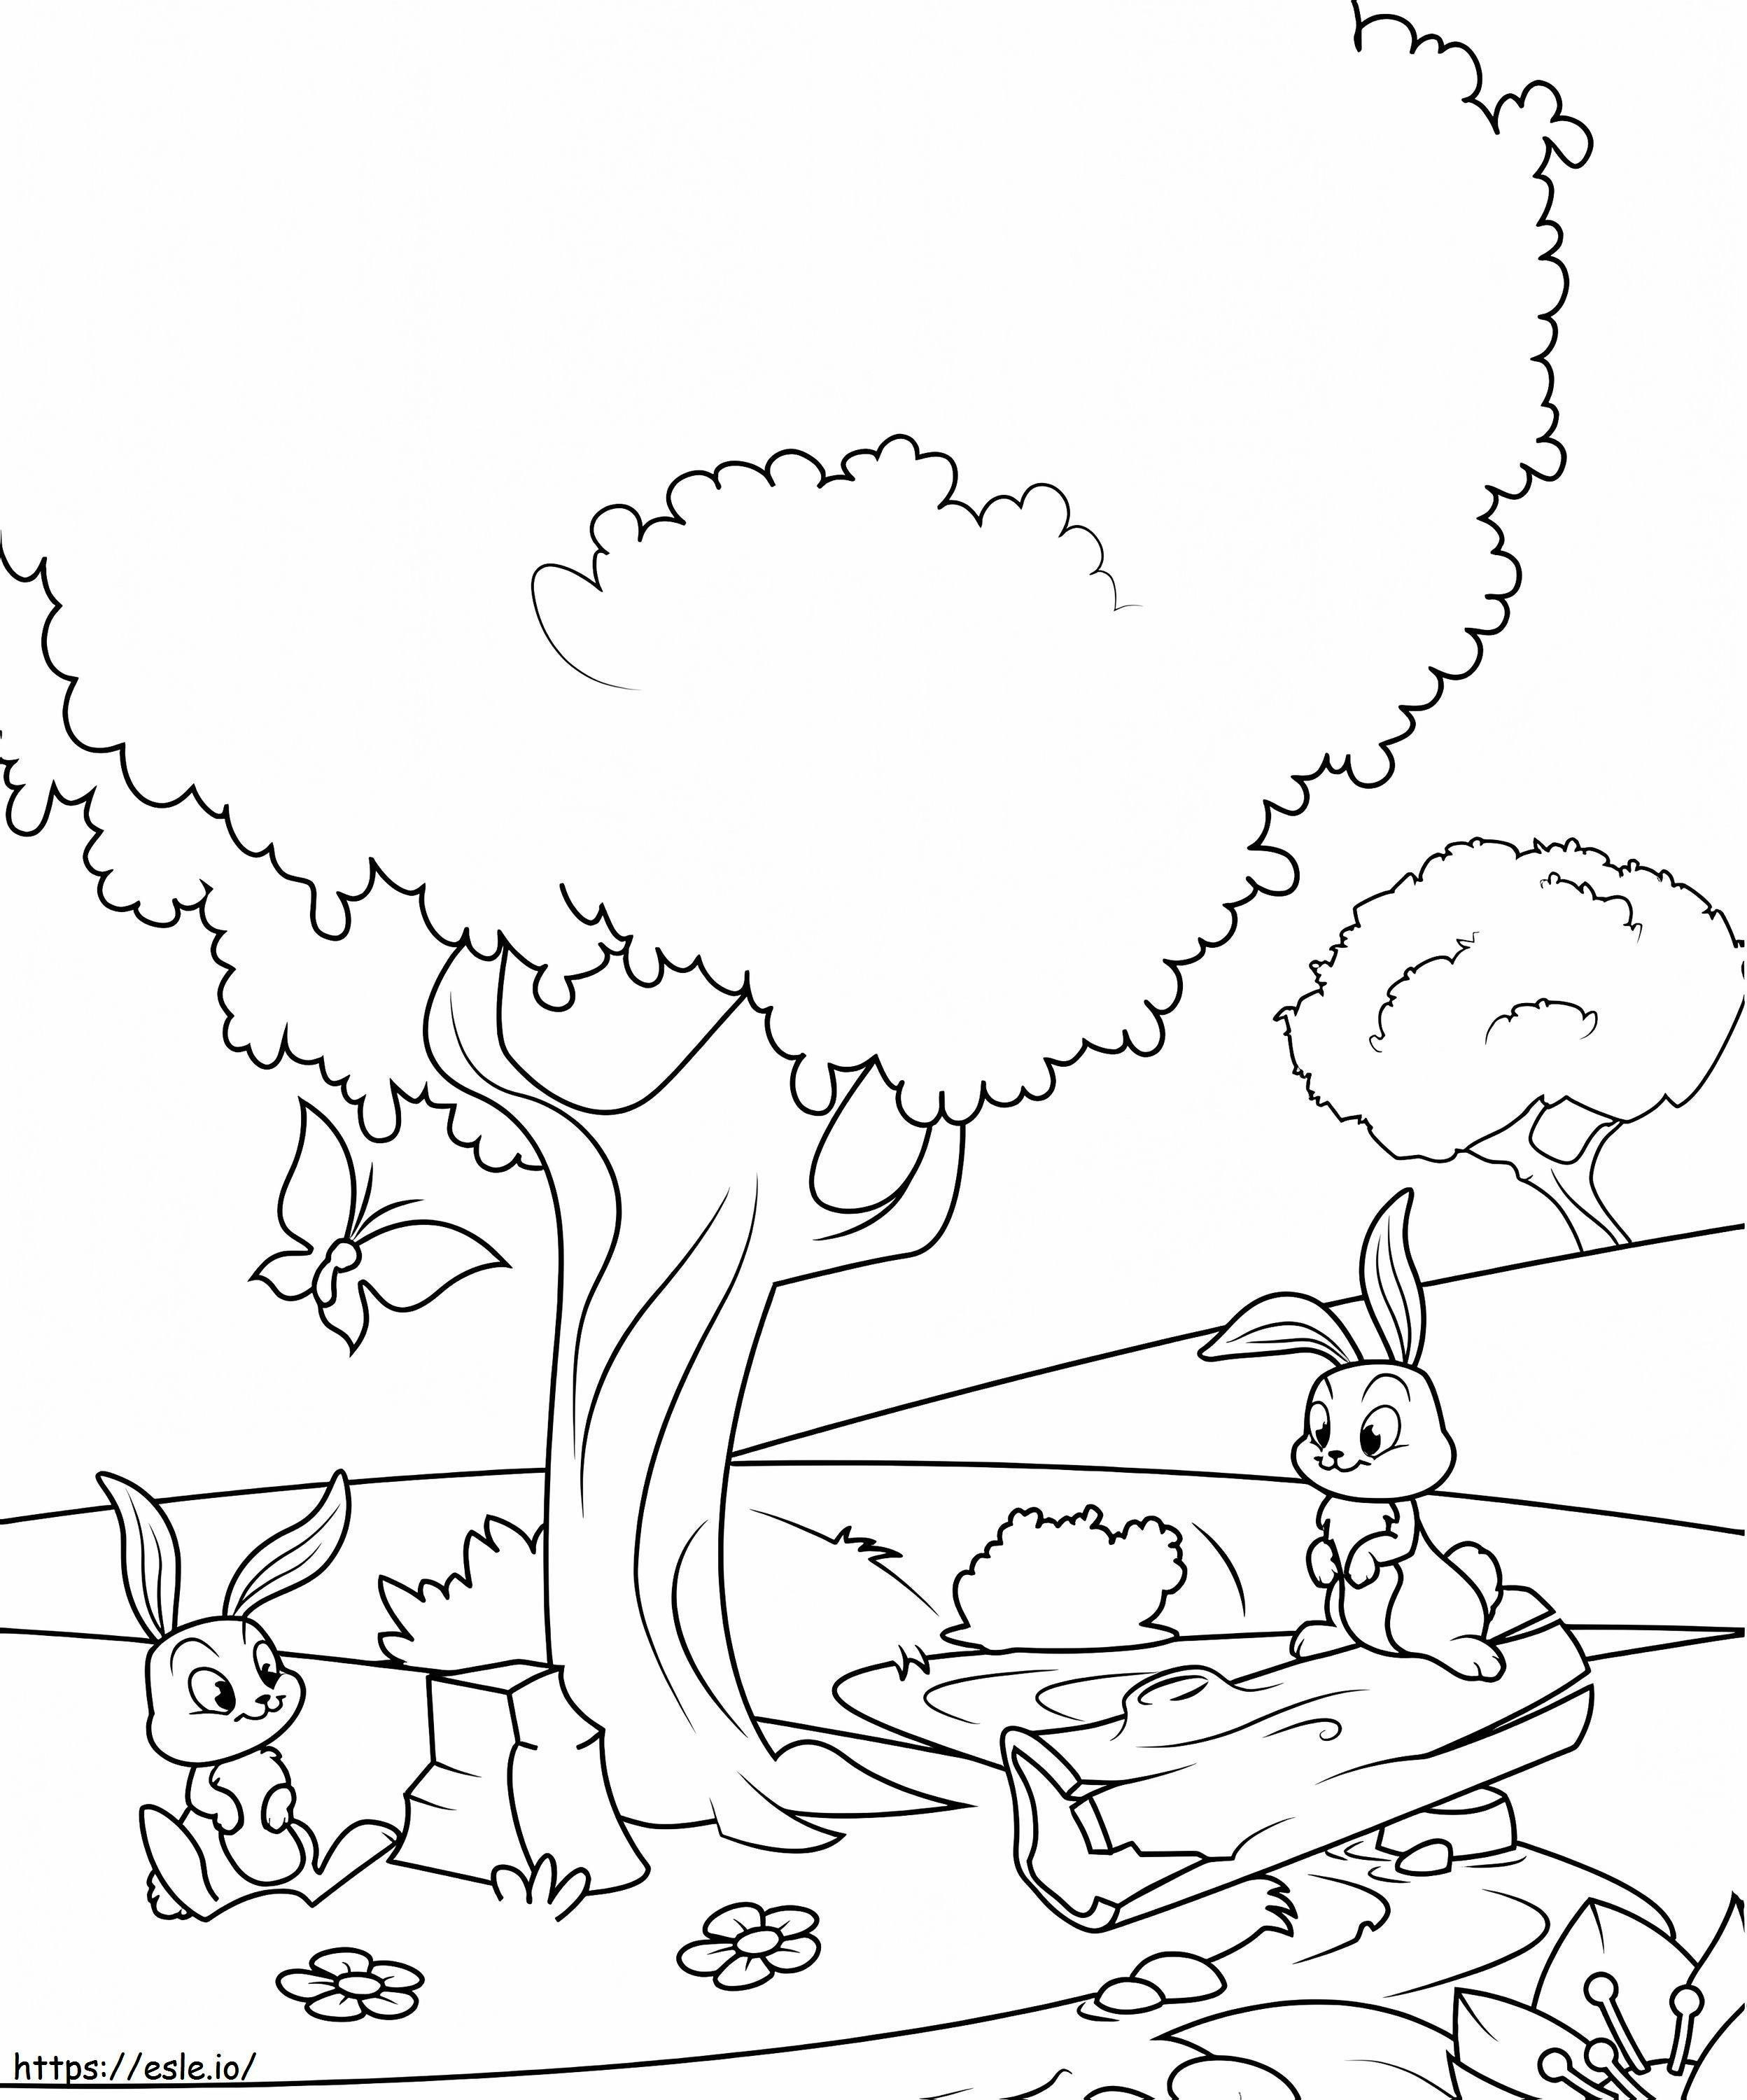 Coelhos debaixo da árvore para colorir